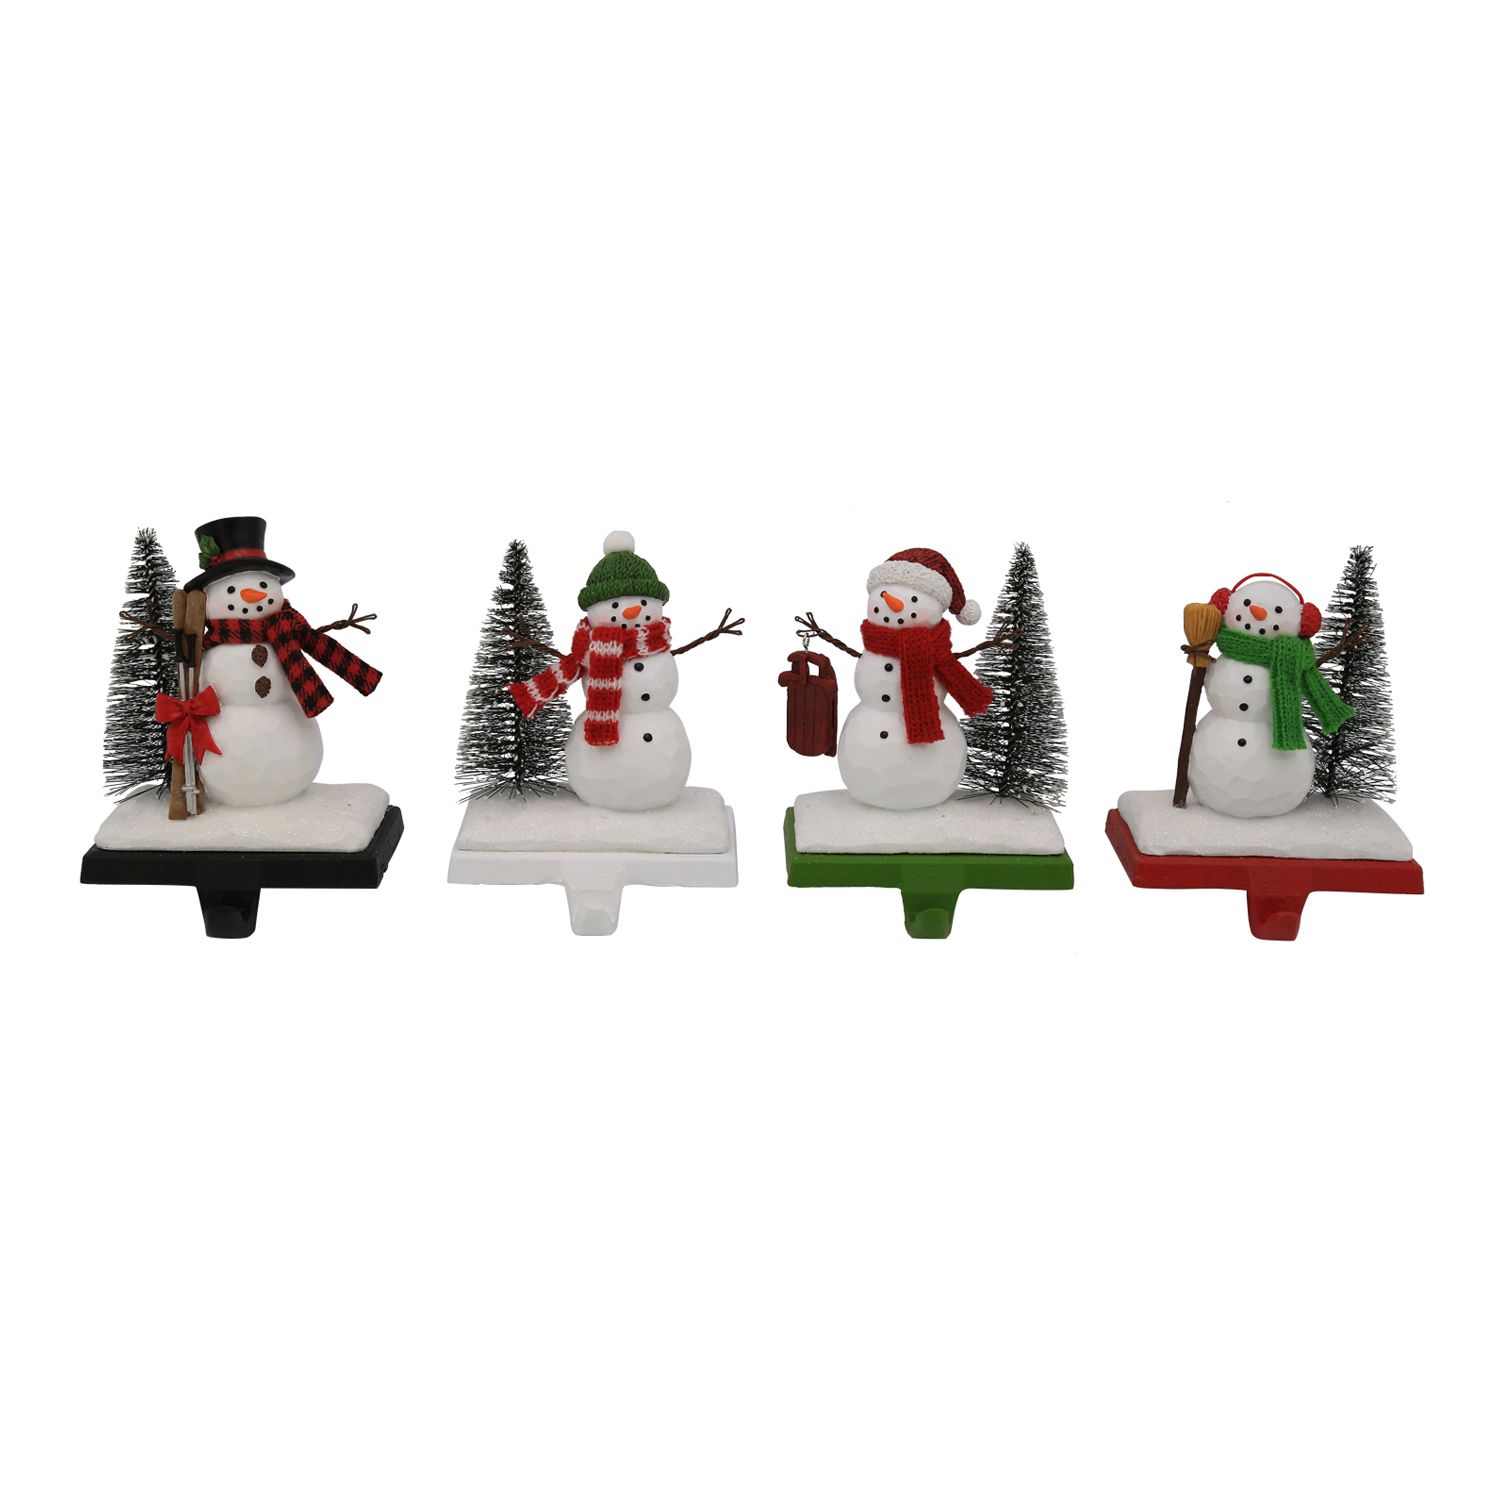 Details about   Eddie Bauer Brushed Chrome Snowman Christmas Stocking Holder Hanger 